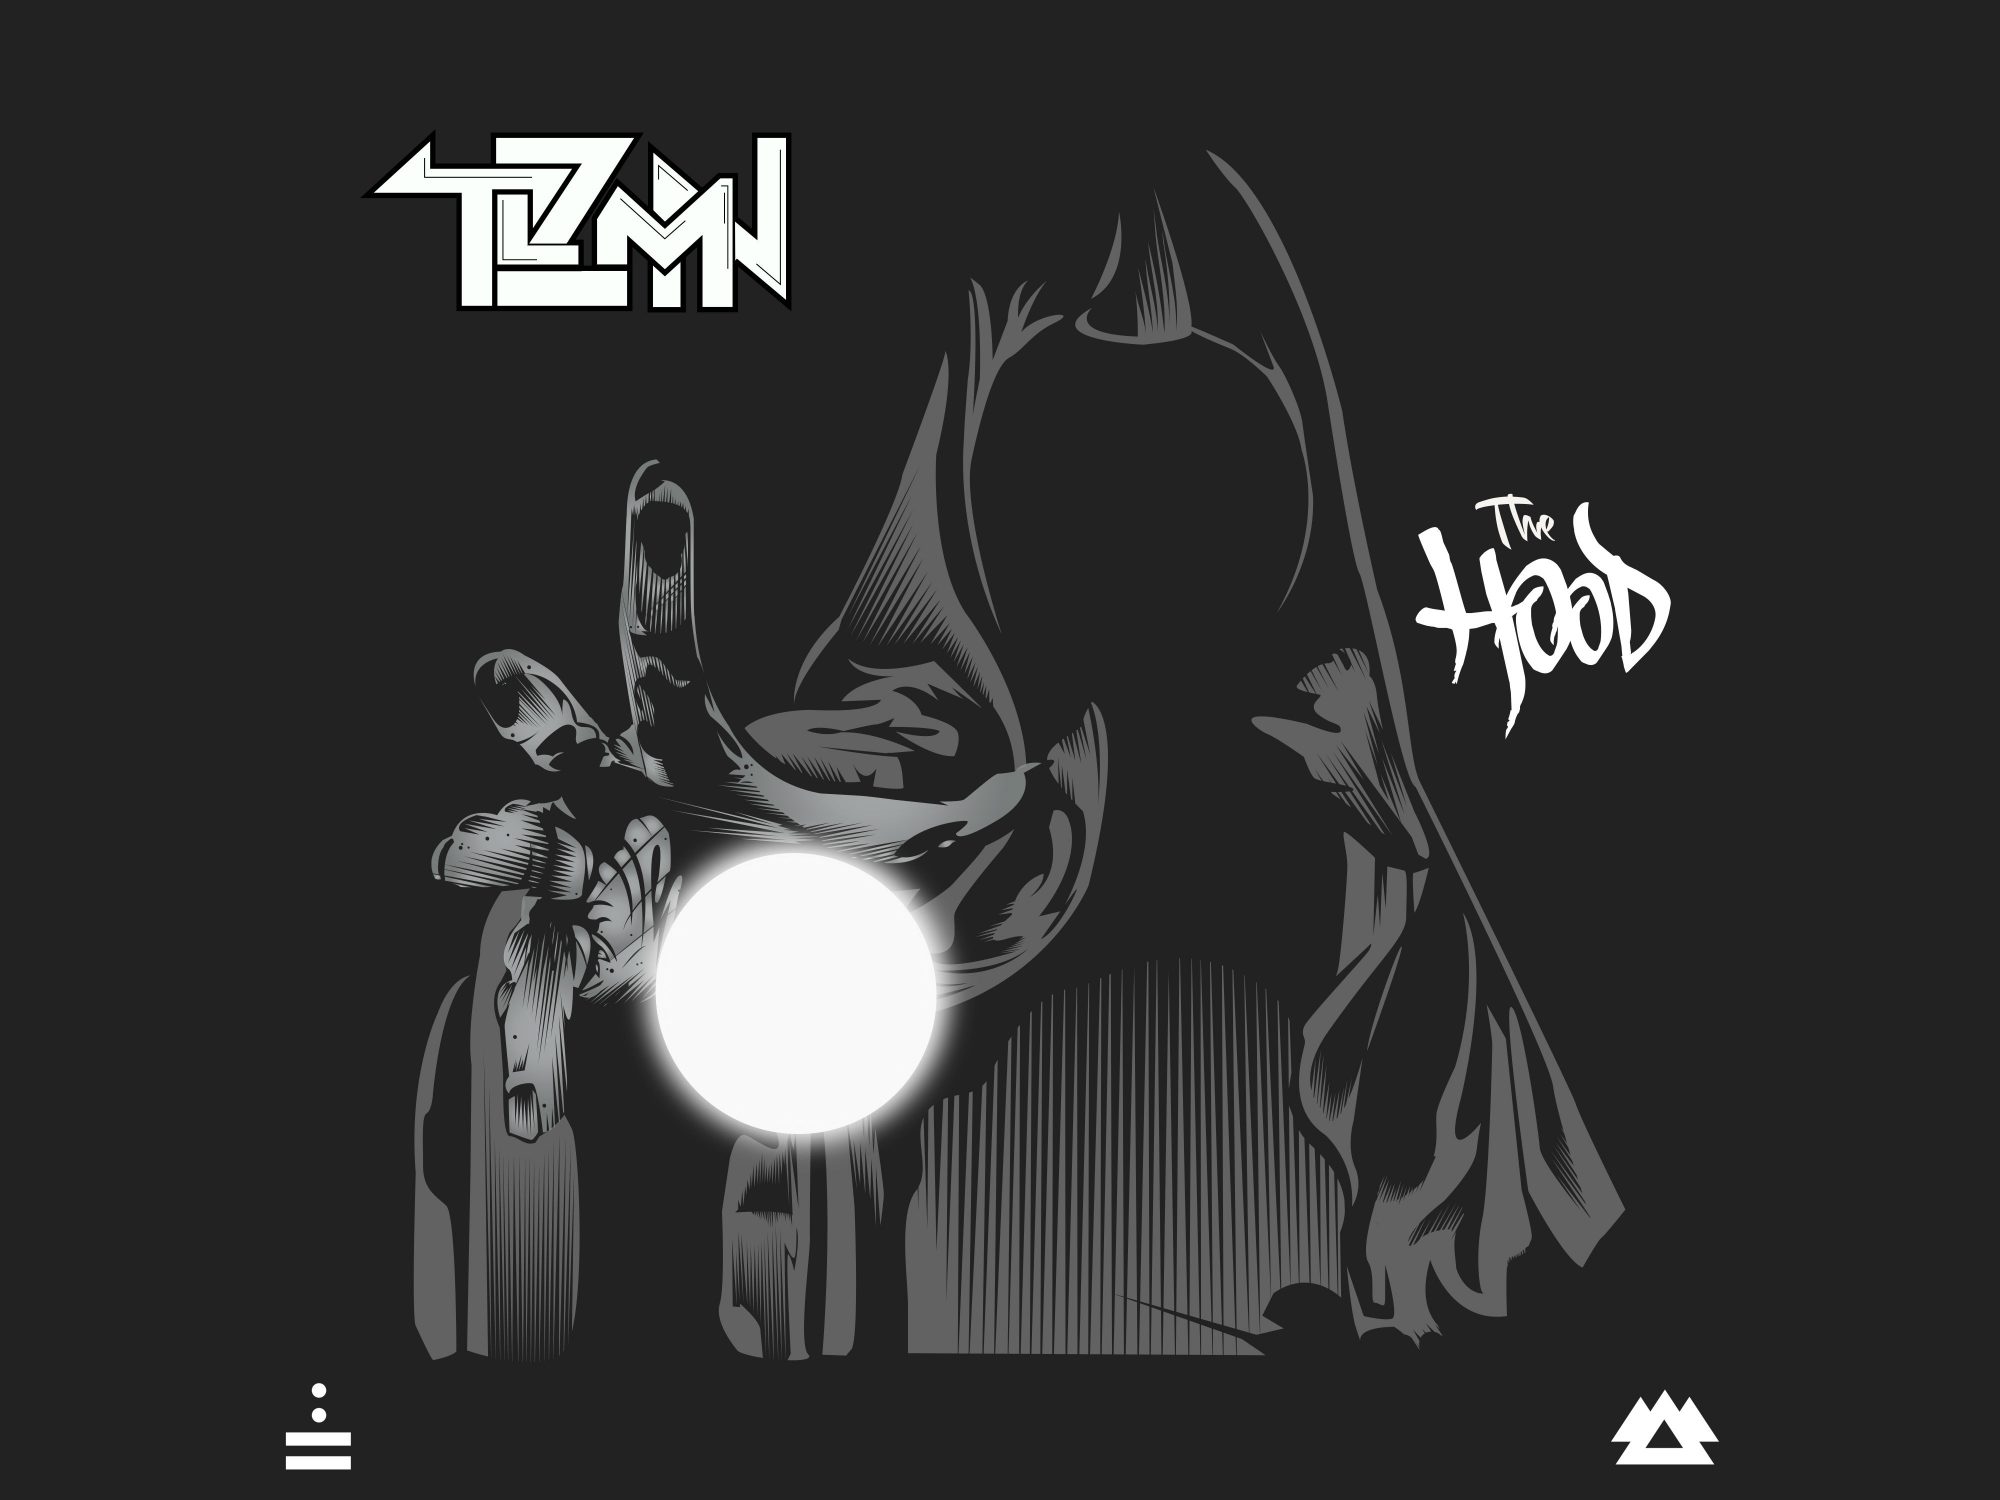 TLZMN The Hood EP